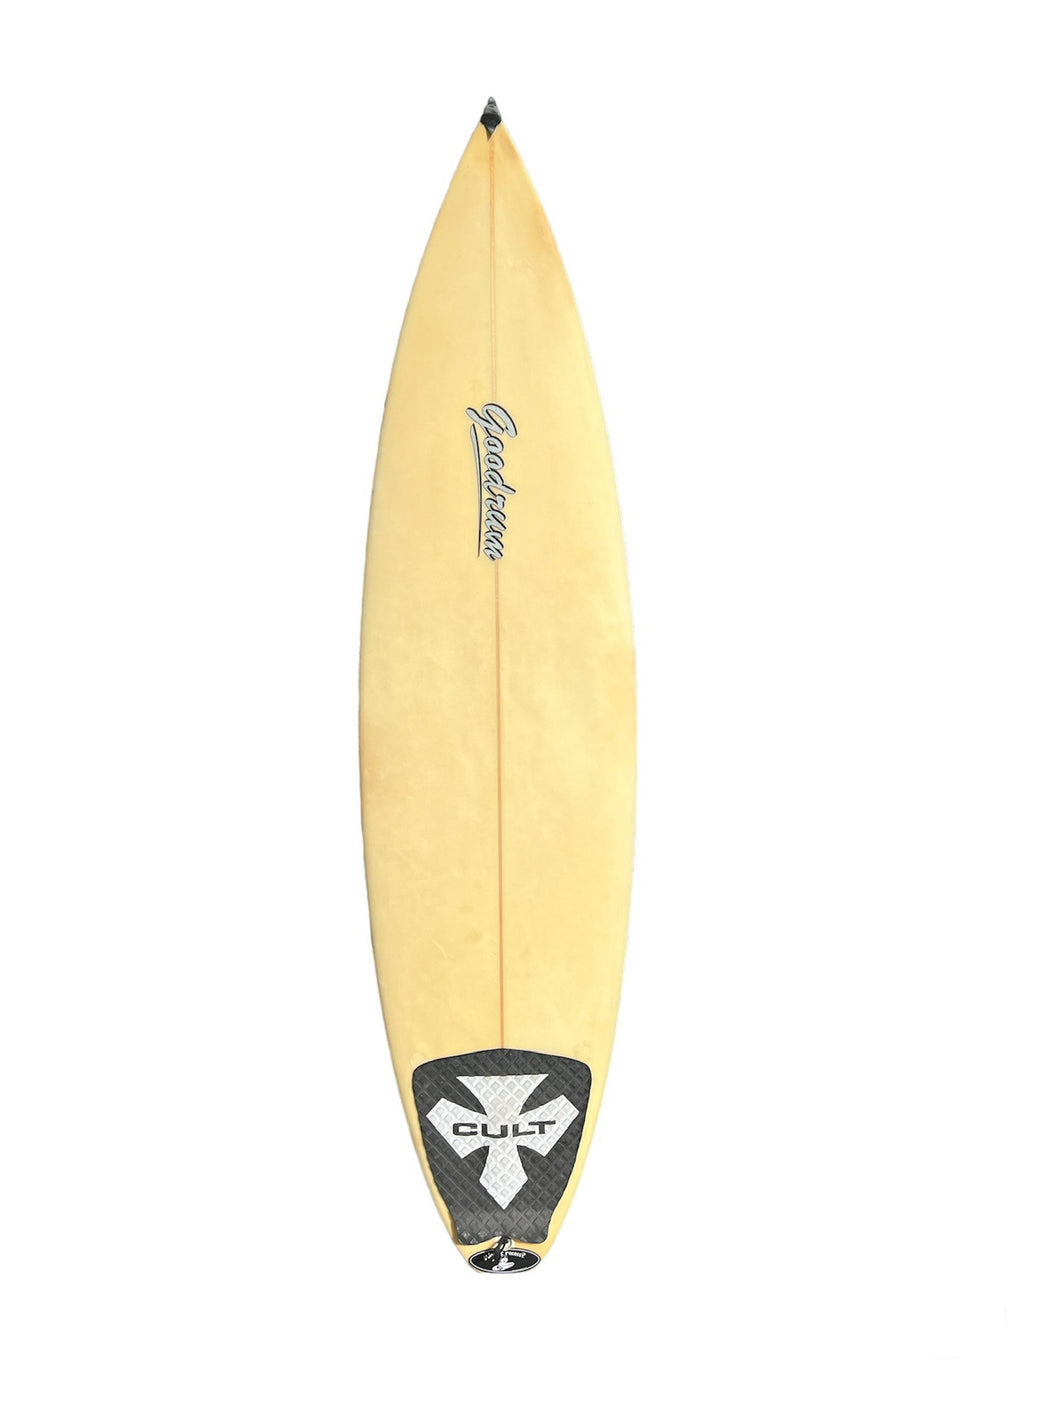 Goodrum 6’4” surfboard 